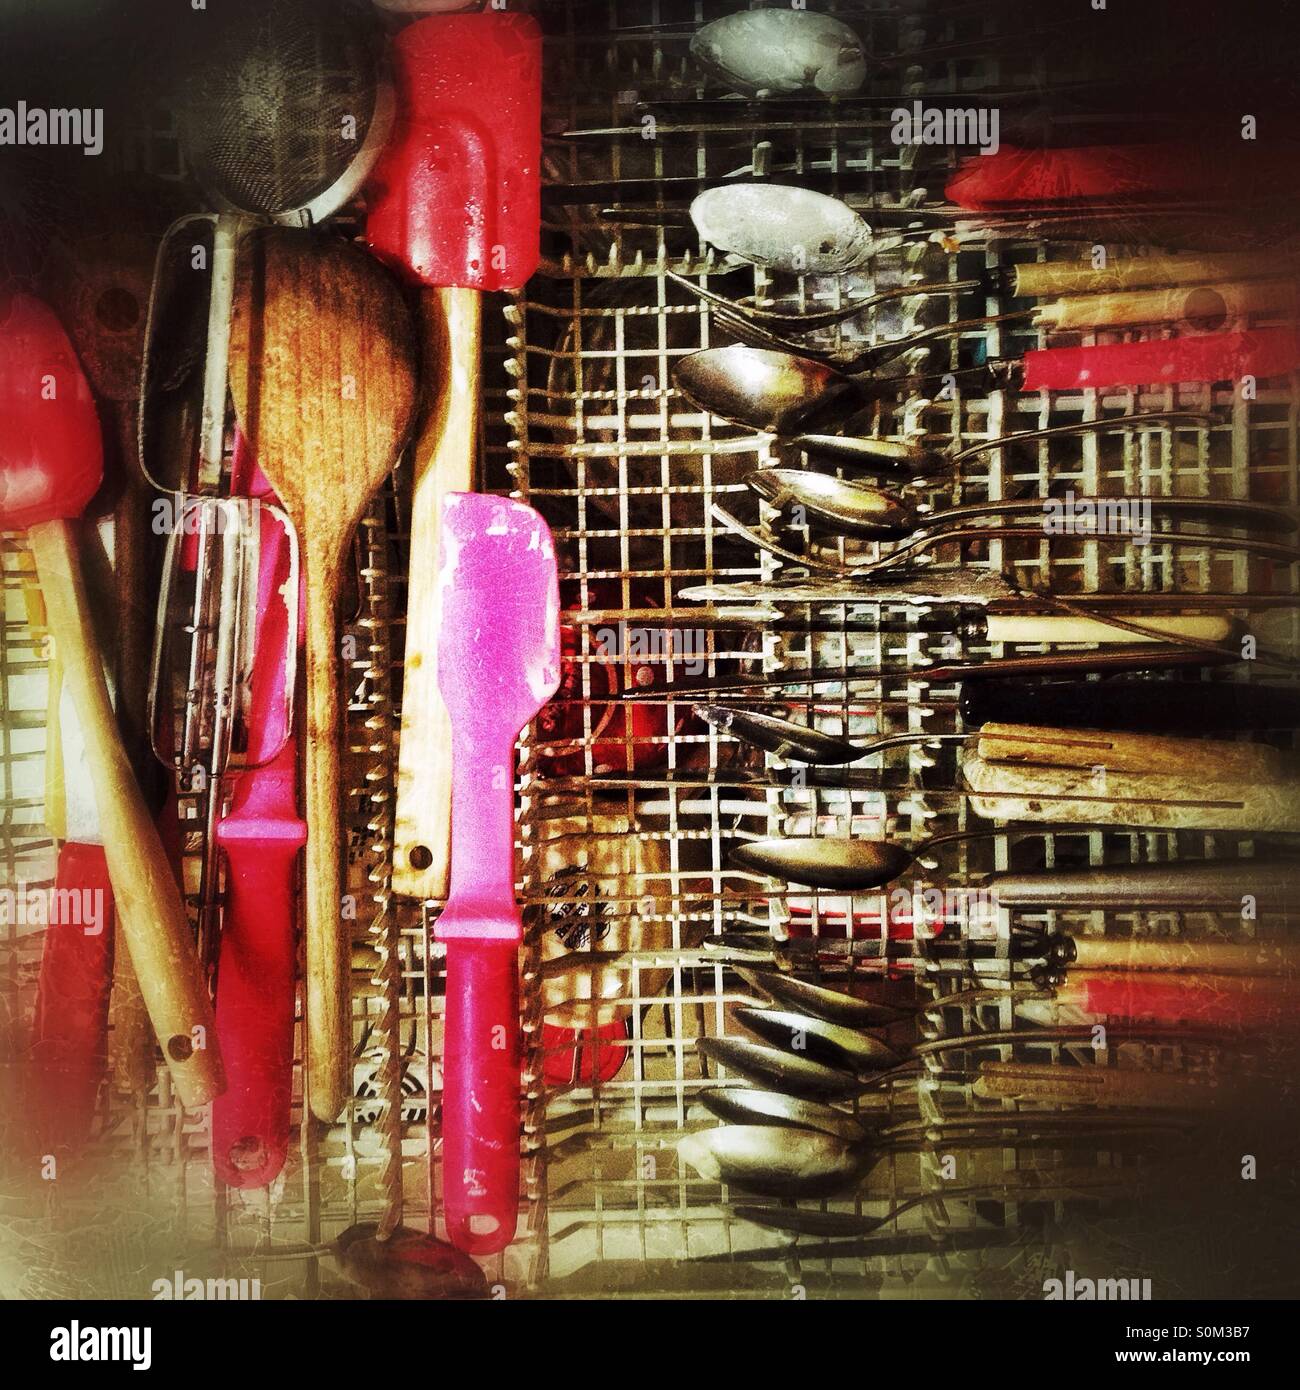 Utensils in dishwasher Stock Photo